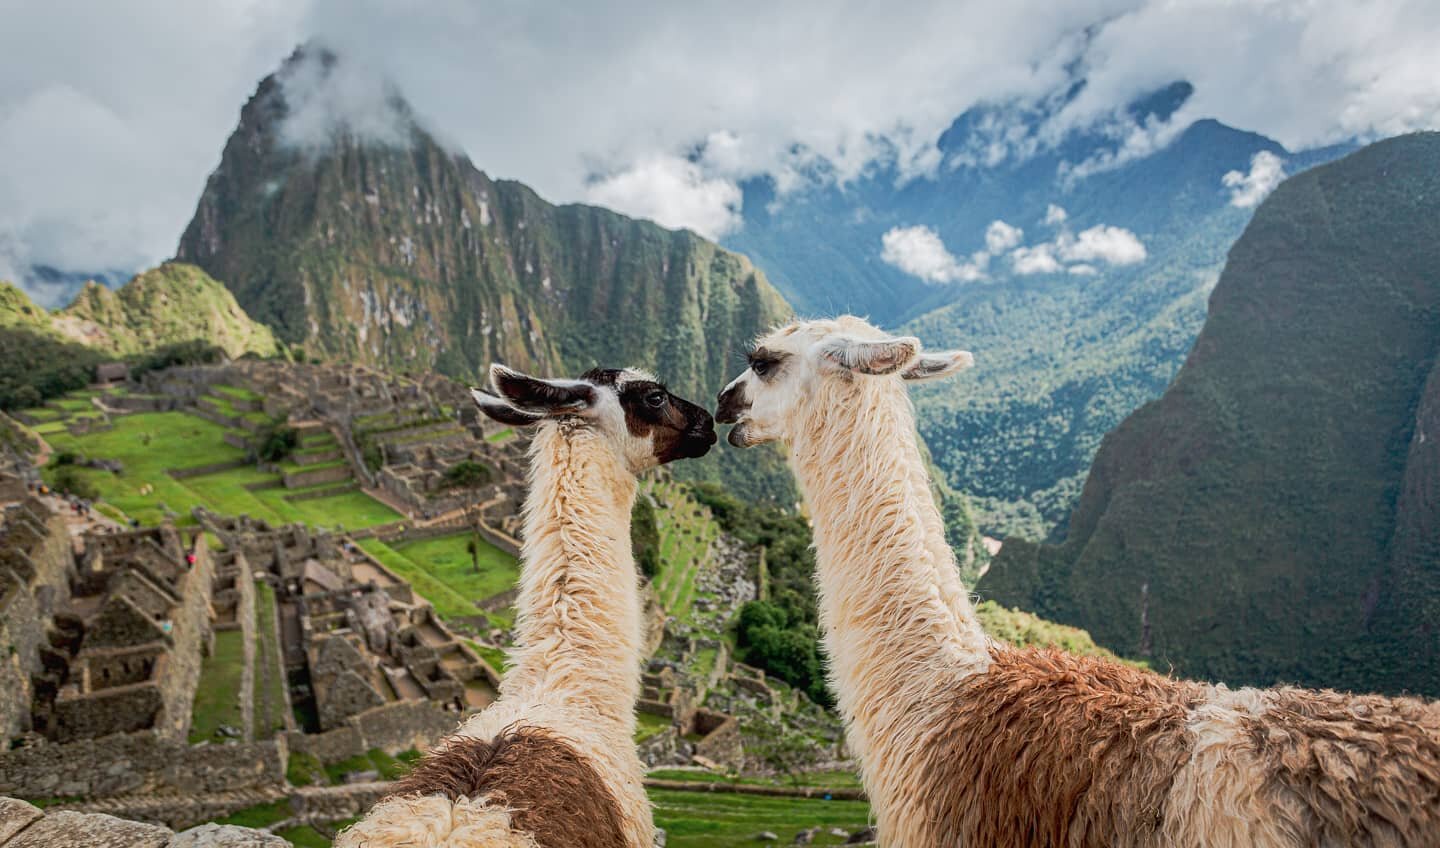 Machu Picchu in February.
.
.
.
.
.
.
.
.
.
.
.
.
.
#natgeo  #natgeoyourshot  #machupicchu #travelperu  #travelperu🇵🇪 #llamasofinstagram  #llama  #traveltheworld #wanderlust #llamalove  #inca  #incas  #machupicchu  #travelsouthamerica #incaruins  #